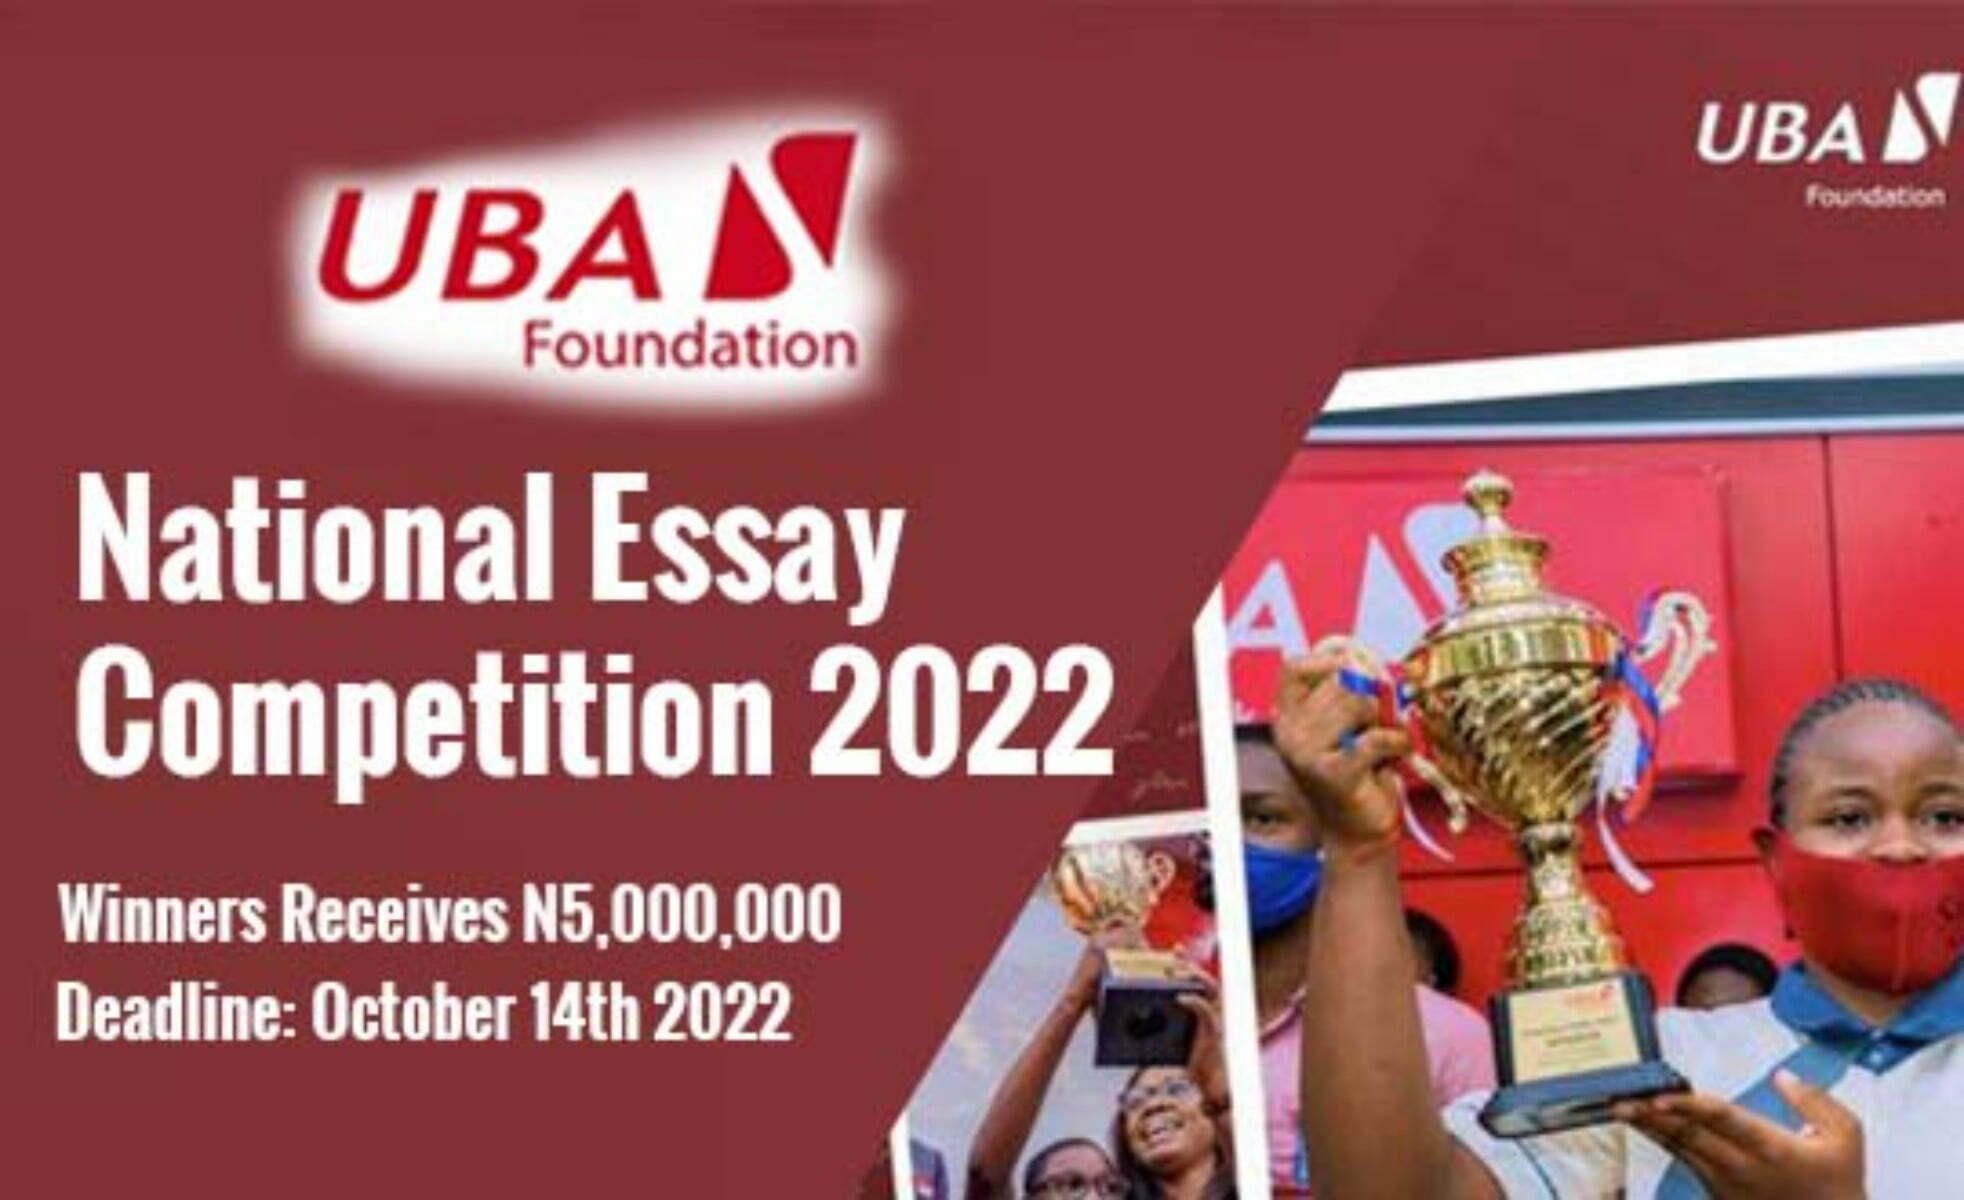 uba essay writing competition 2022